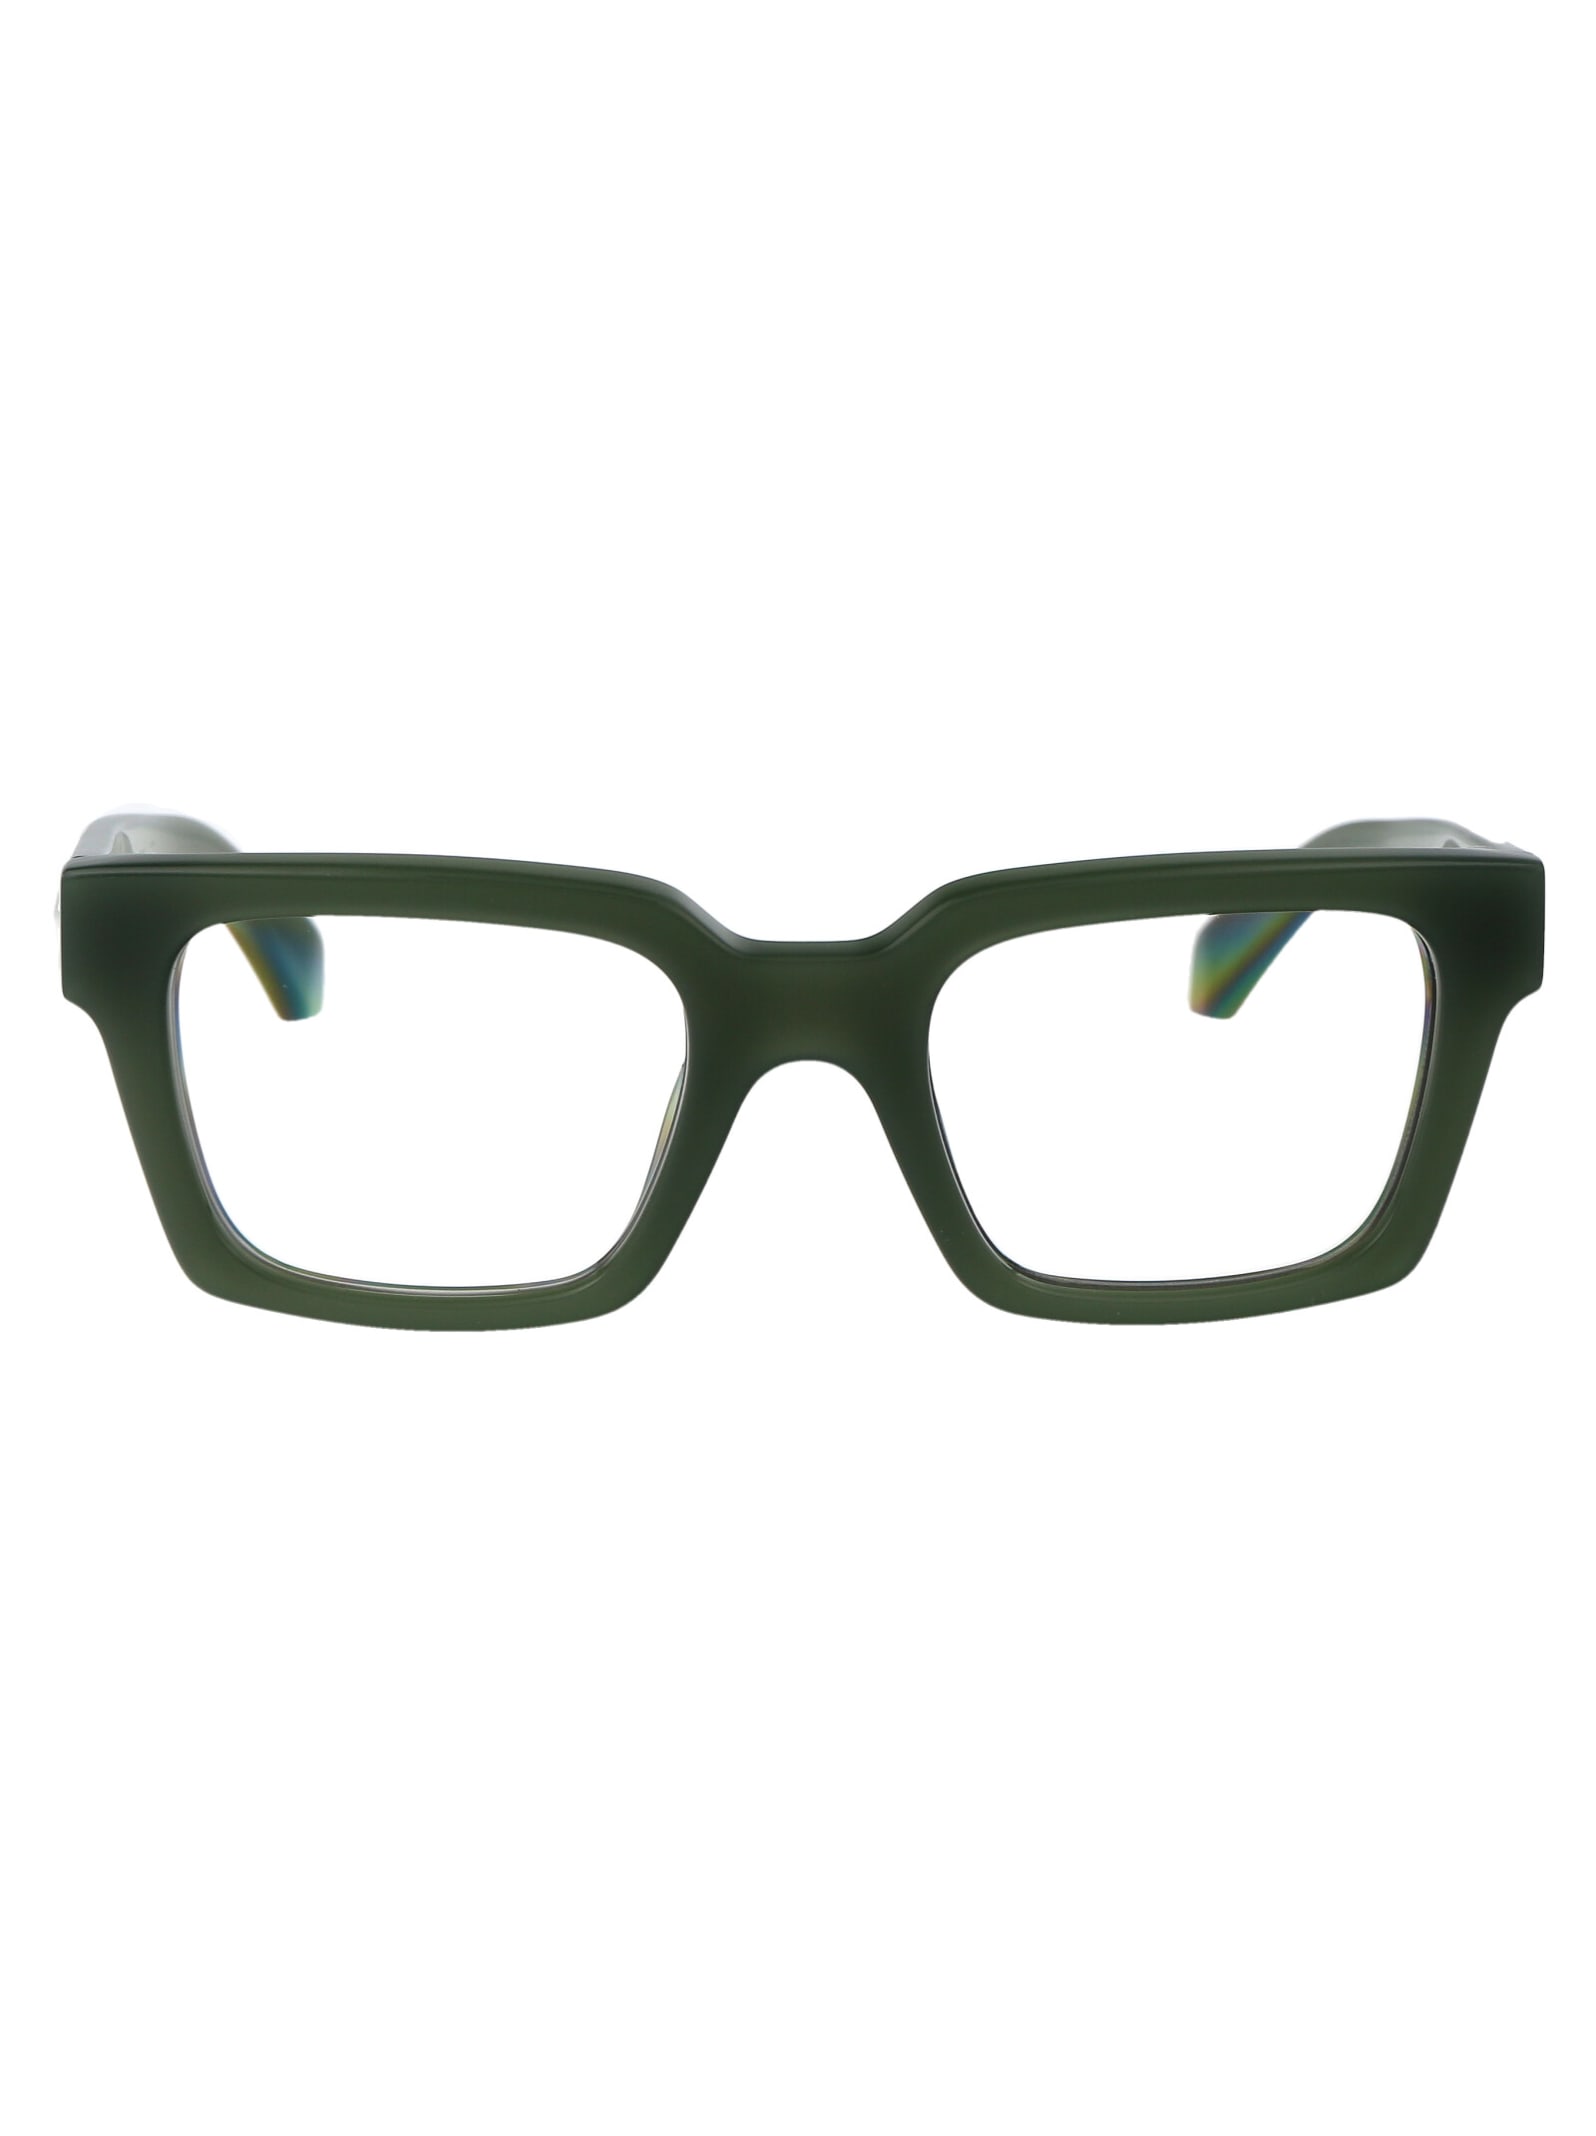 Optical Style 72 Glasses